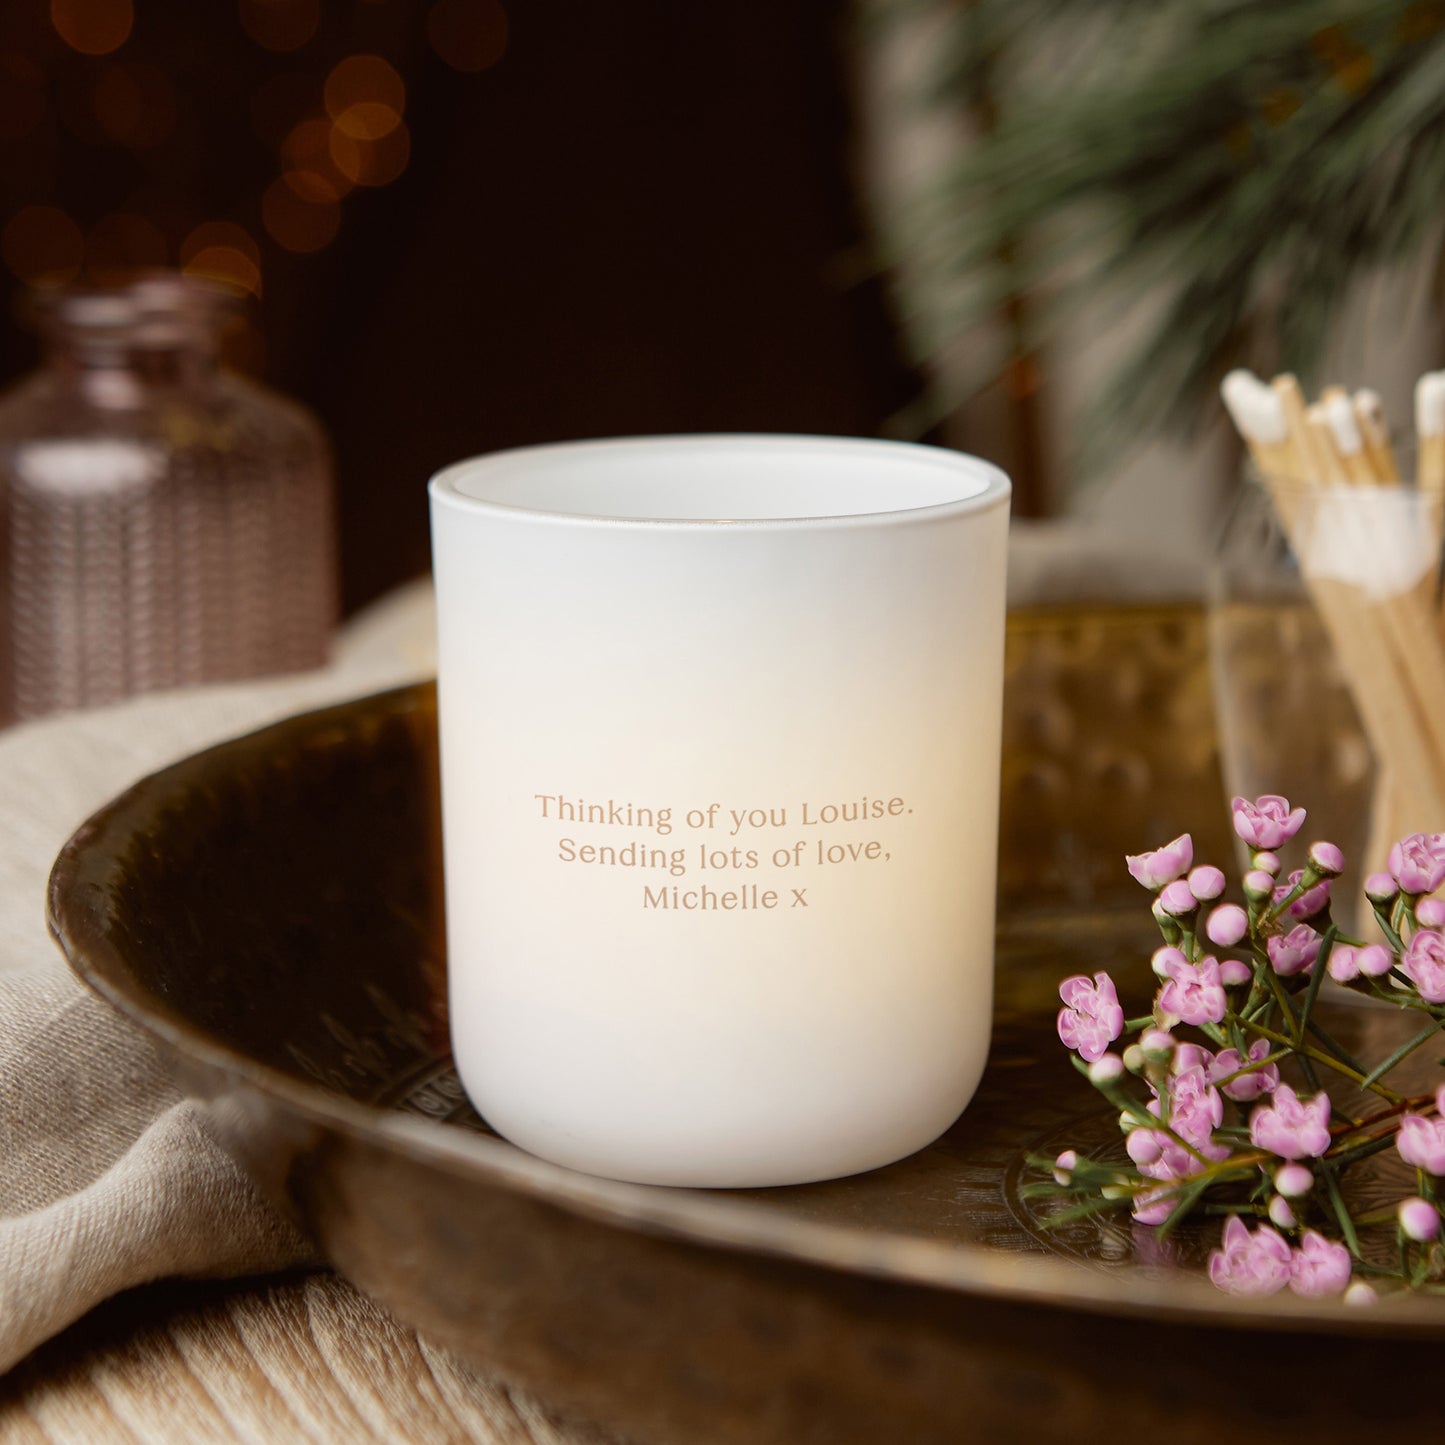 Positivity Keepsake Gift Personalised Tea Light Holder with Candles